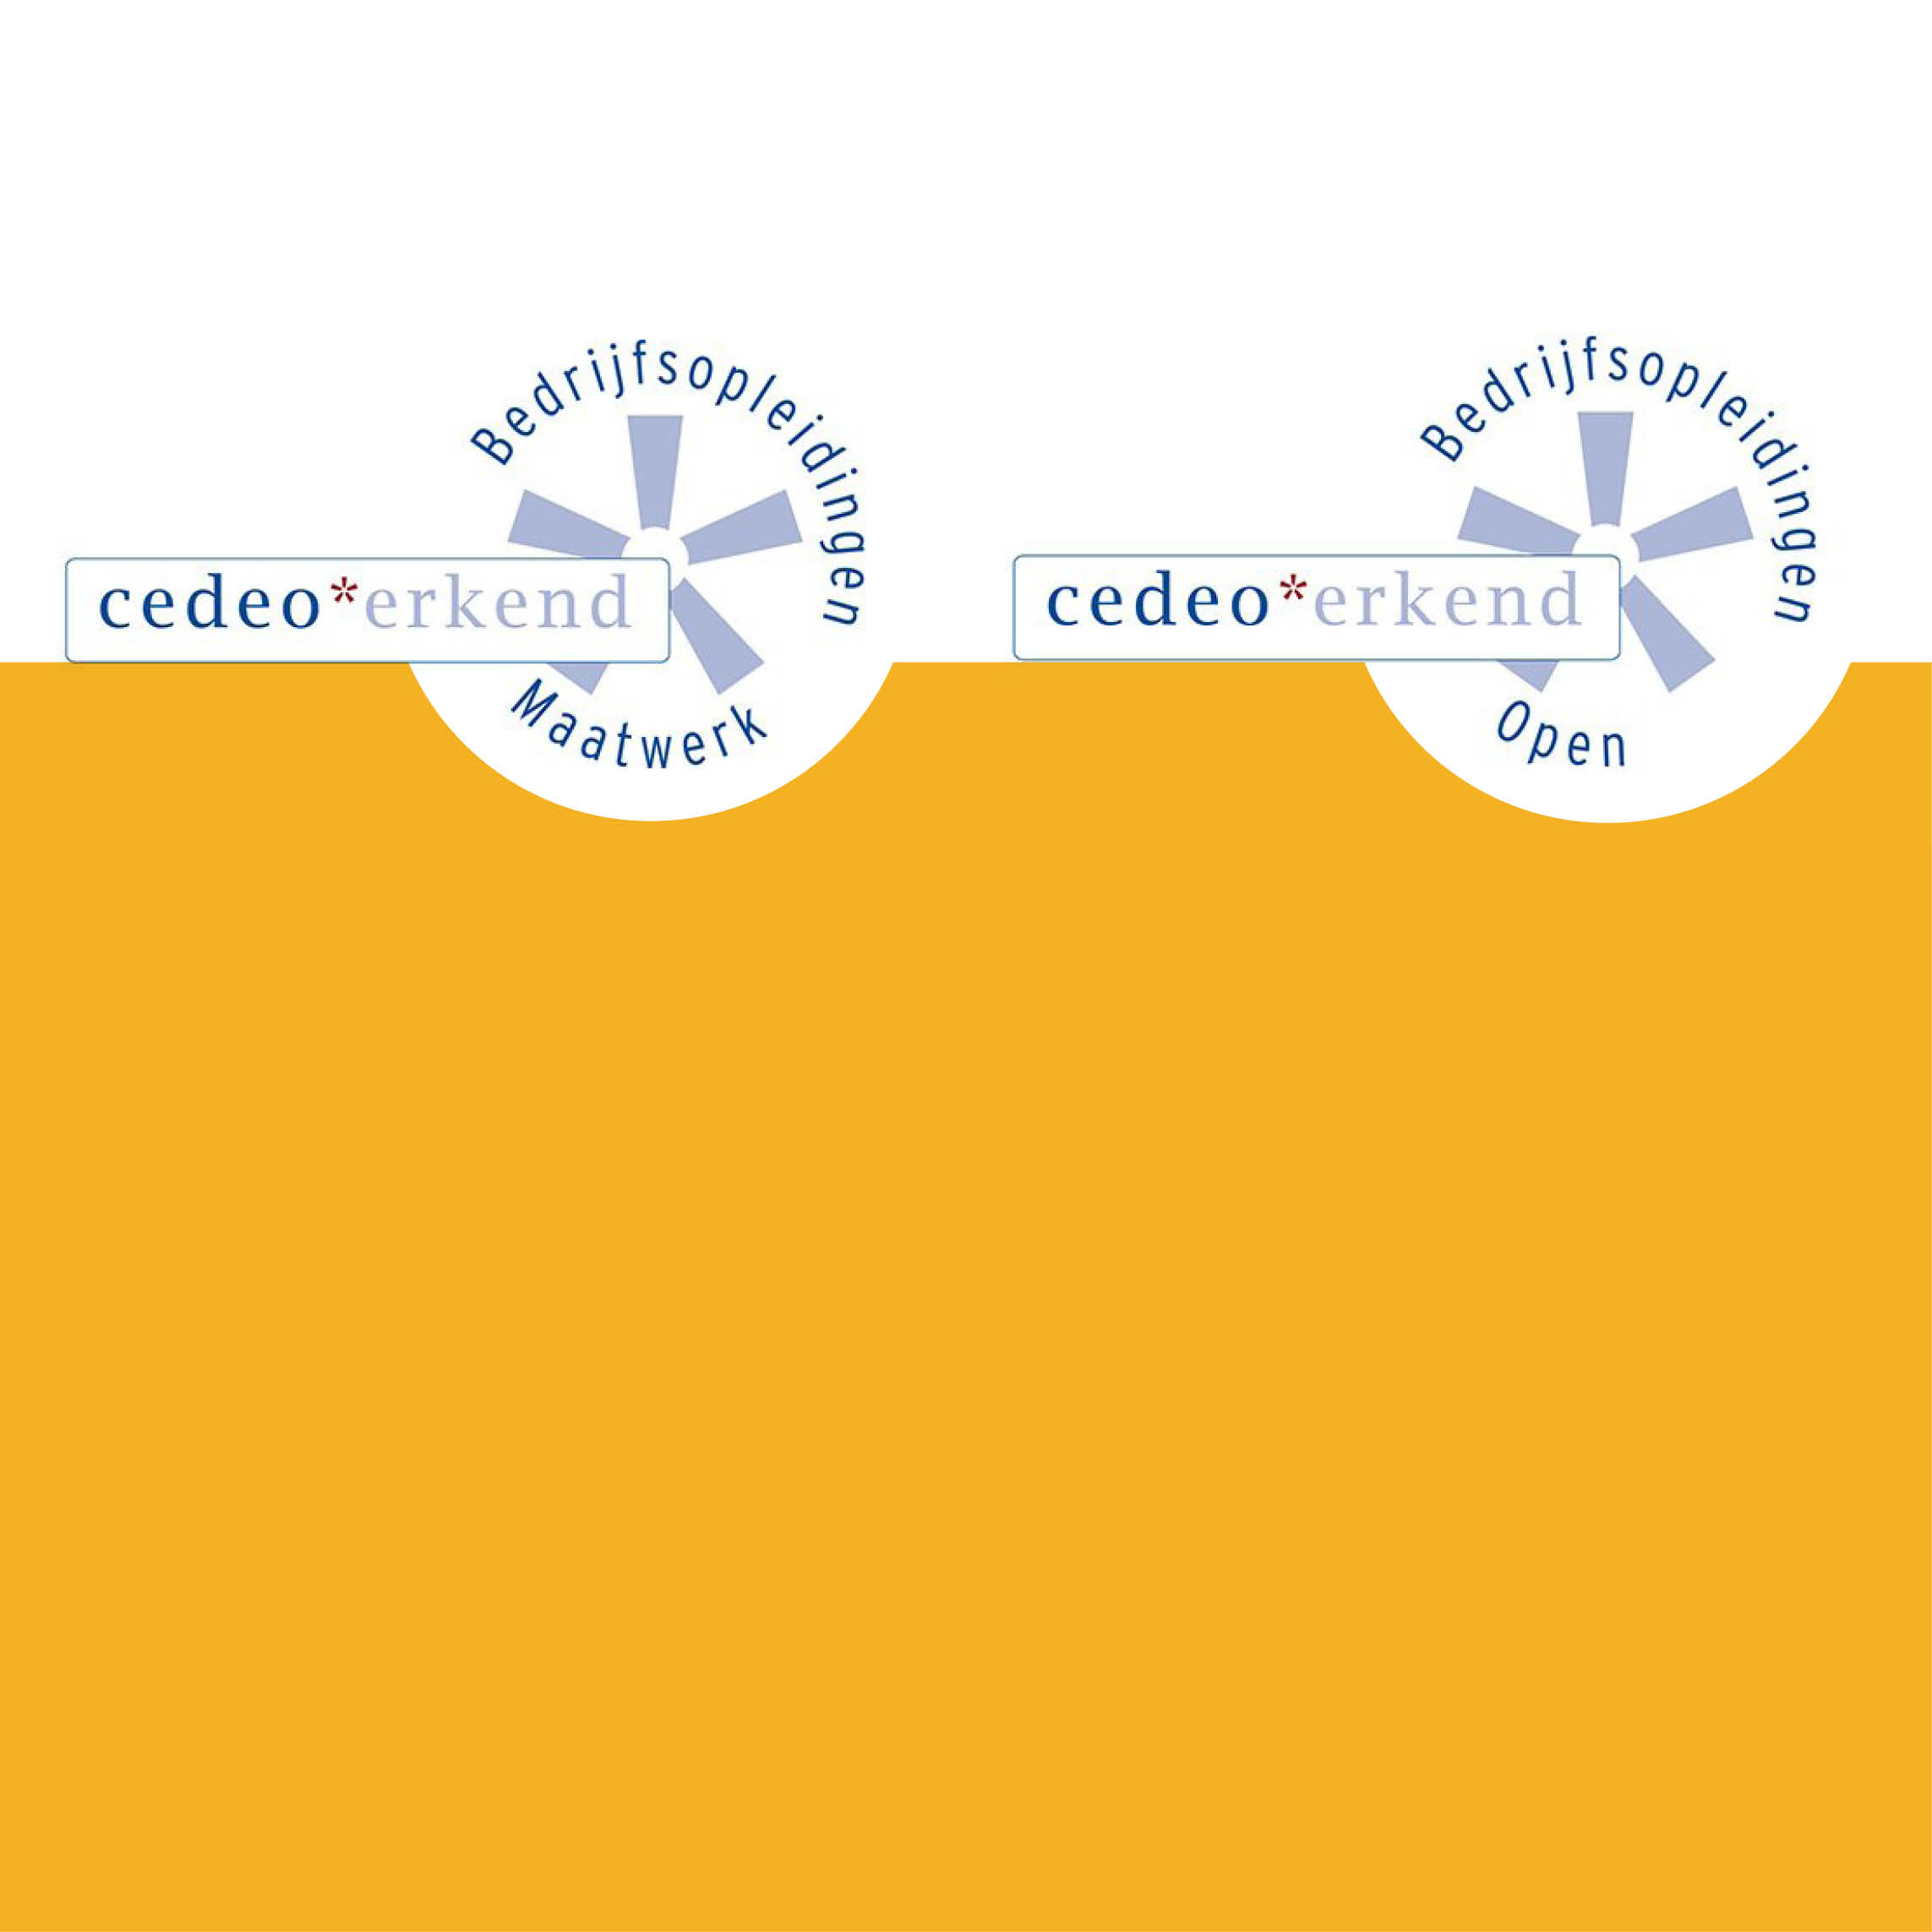 Amsterdam UMC Academie ontvangt opnieuw Cedeo-erkenning